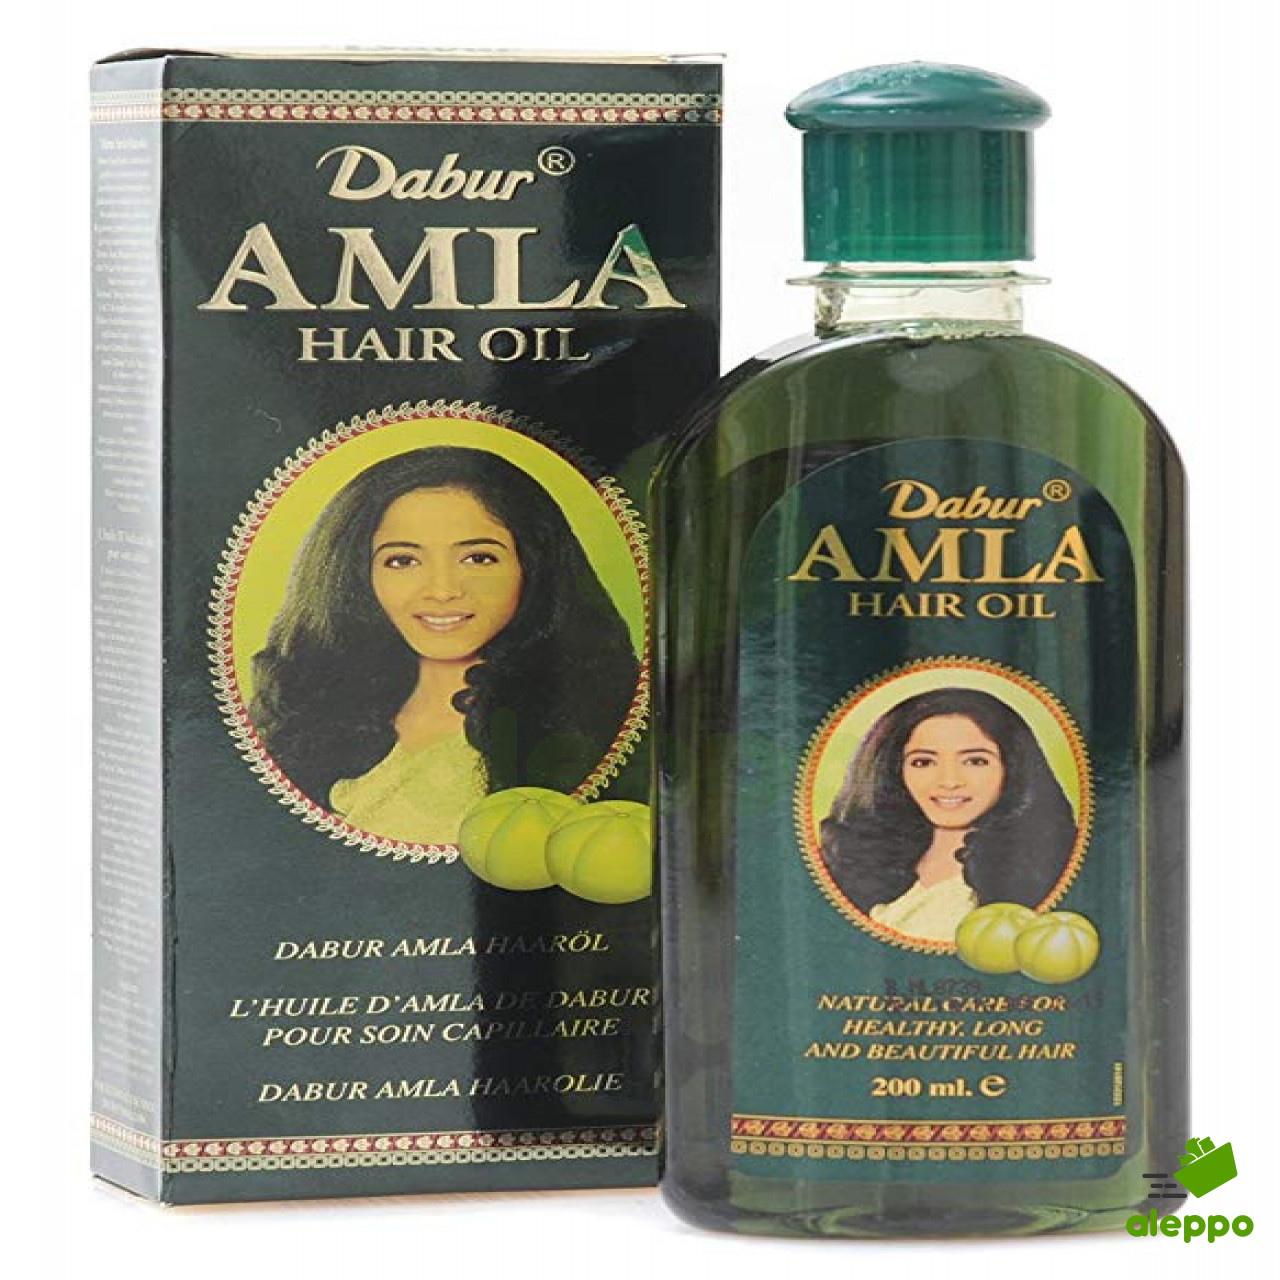 Dabur Amla Hair Oil 200ml - Anta Foods Ltd